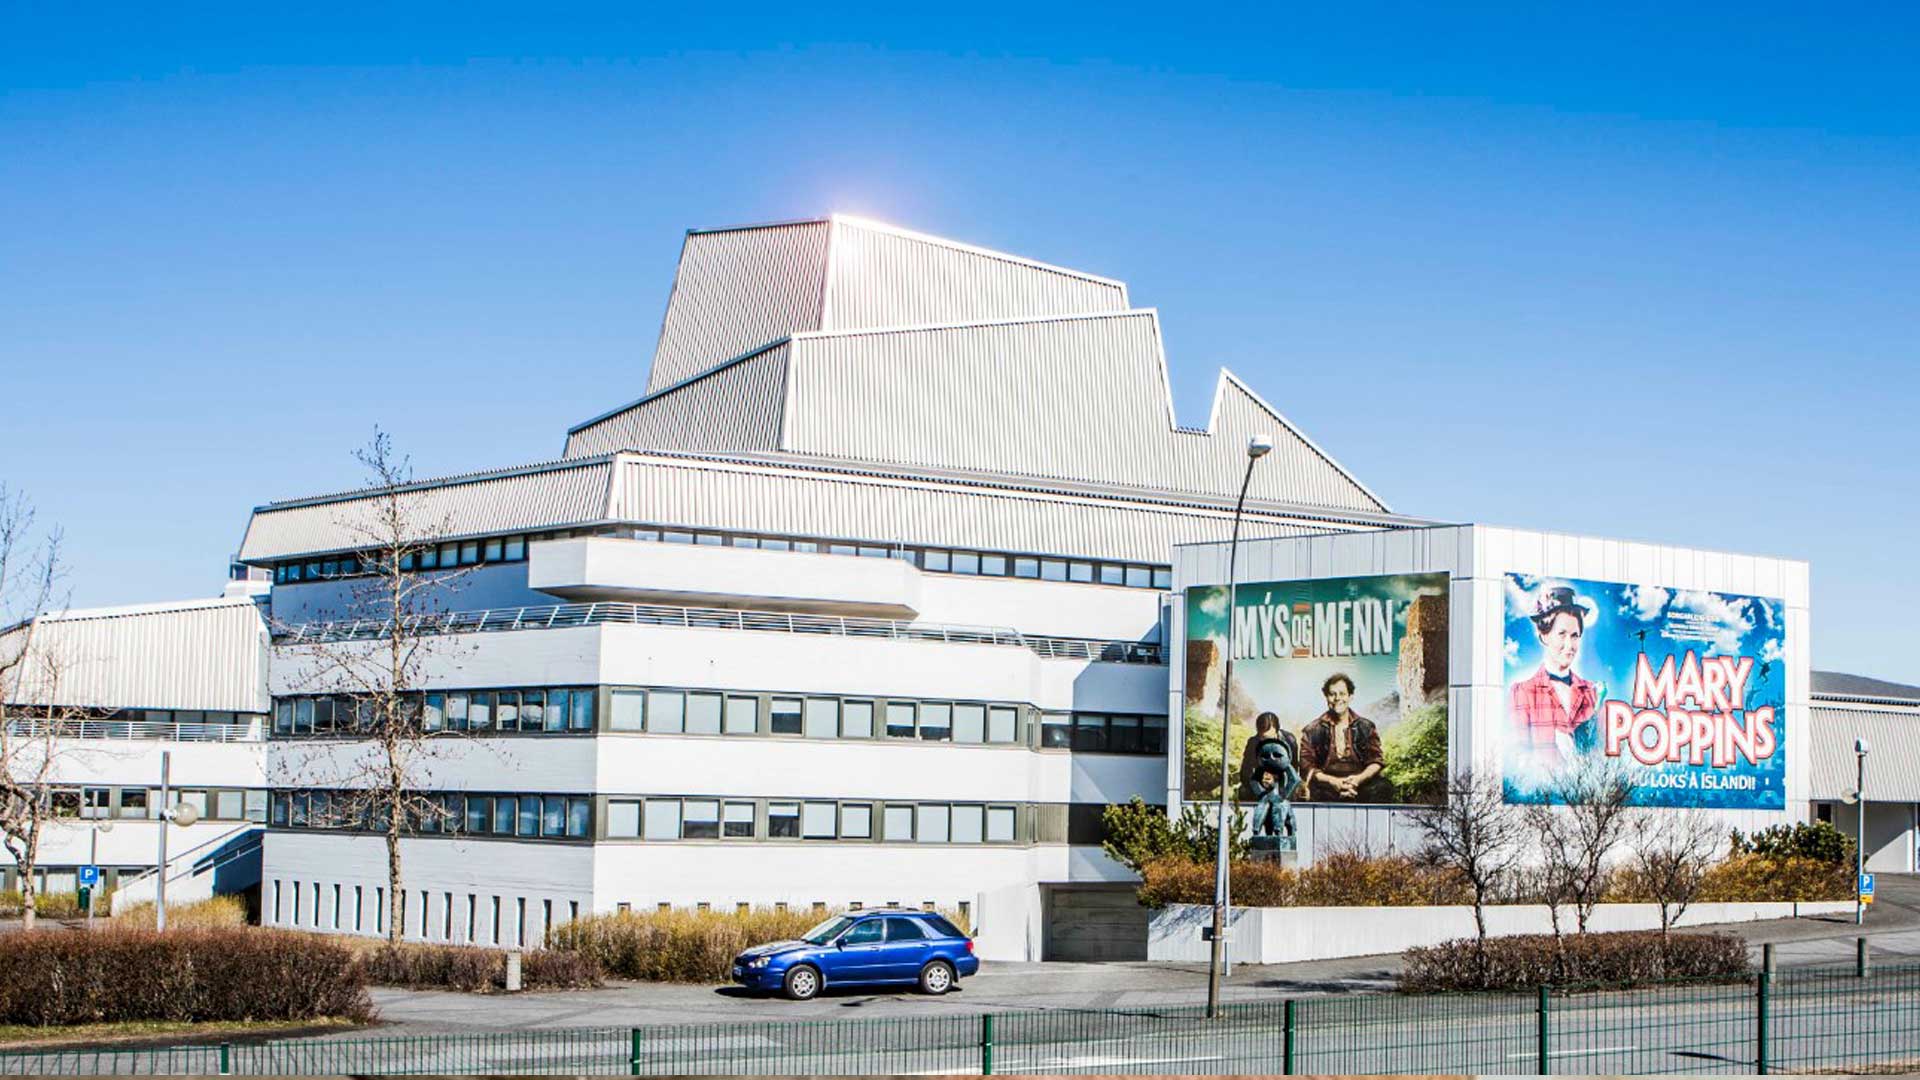 Reykjavik City Theatre